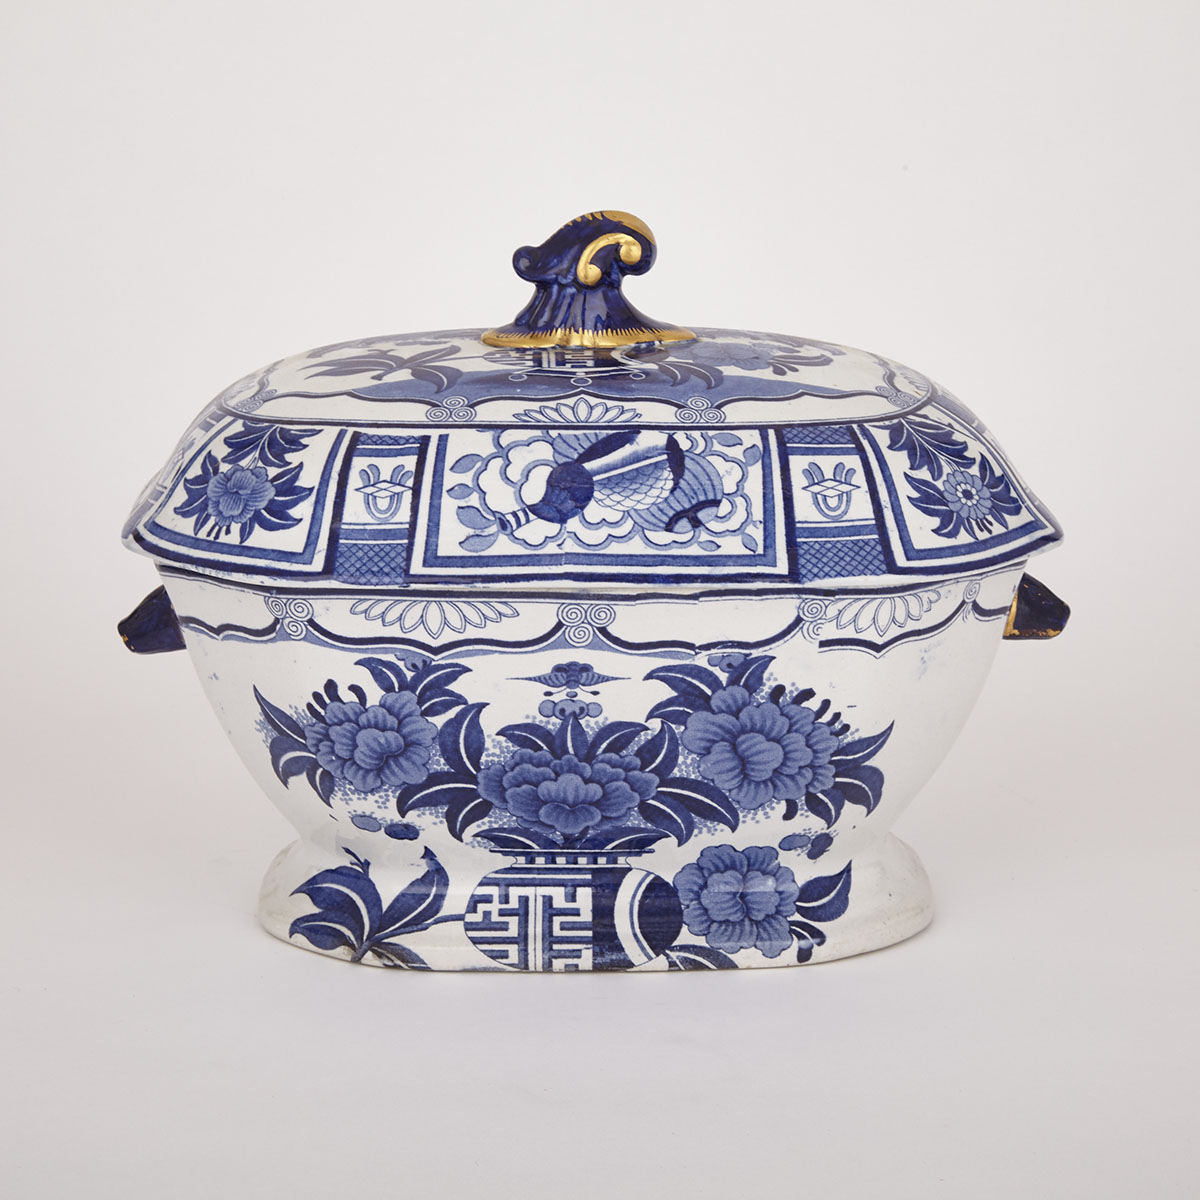 Mason’s Blue Printed ‘Kaolin China’ Ironstone Octagonal Soup Tureen and Cover, c.1815-20